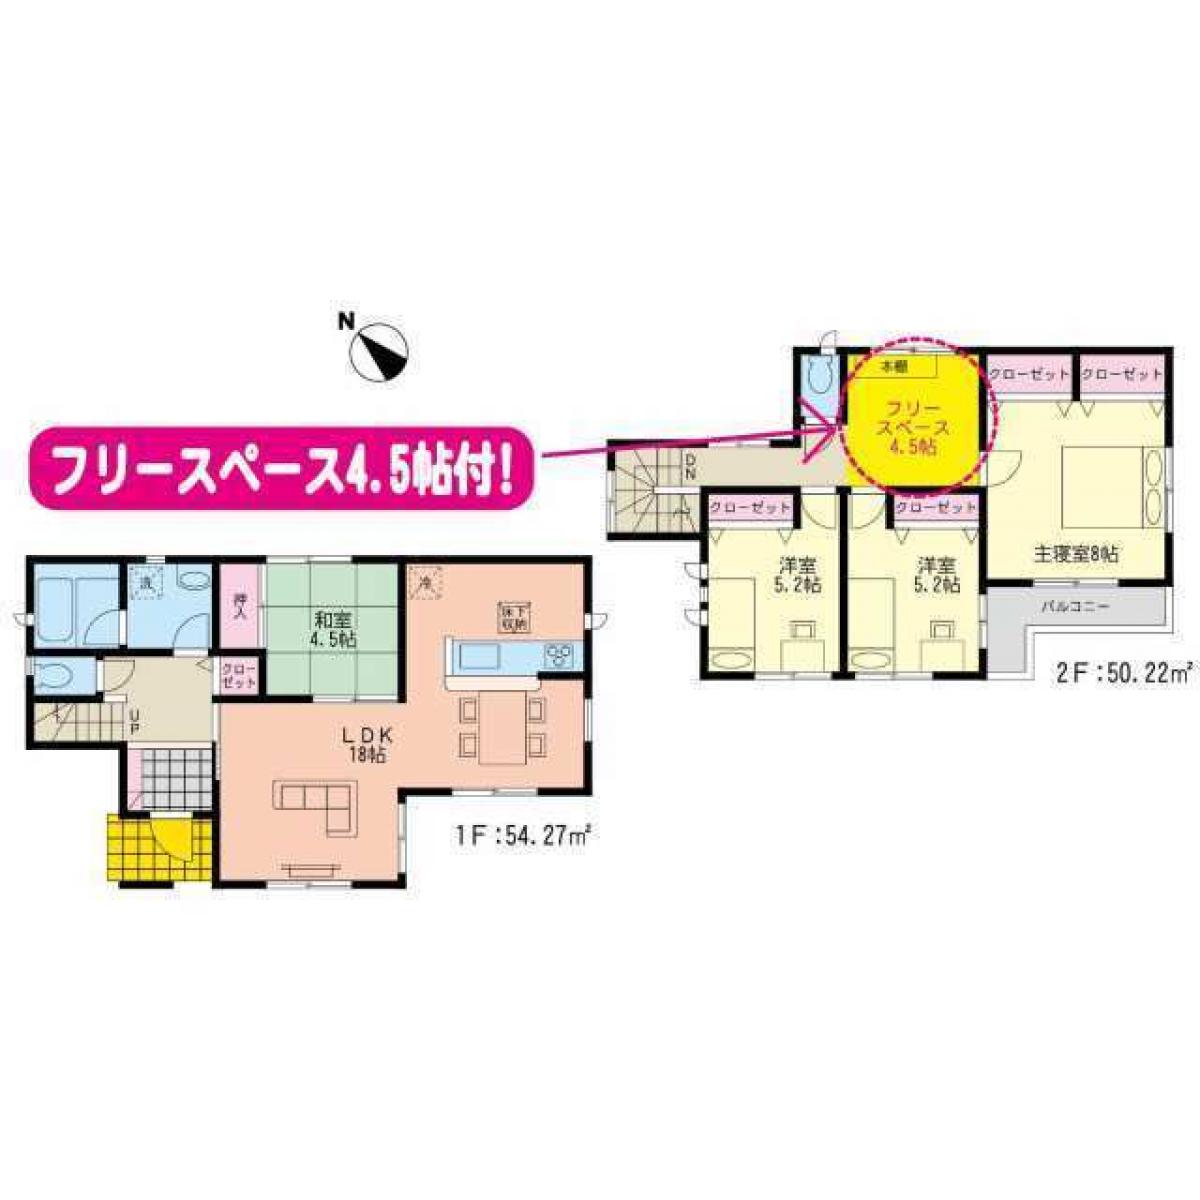 Picture of Home For Sale in Kasuya Gun Umi Machi, Fukuoka, Japan